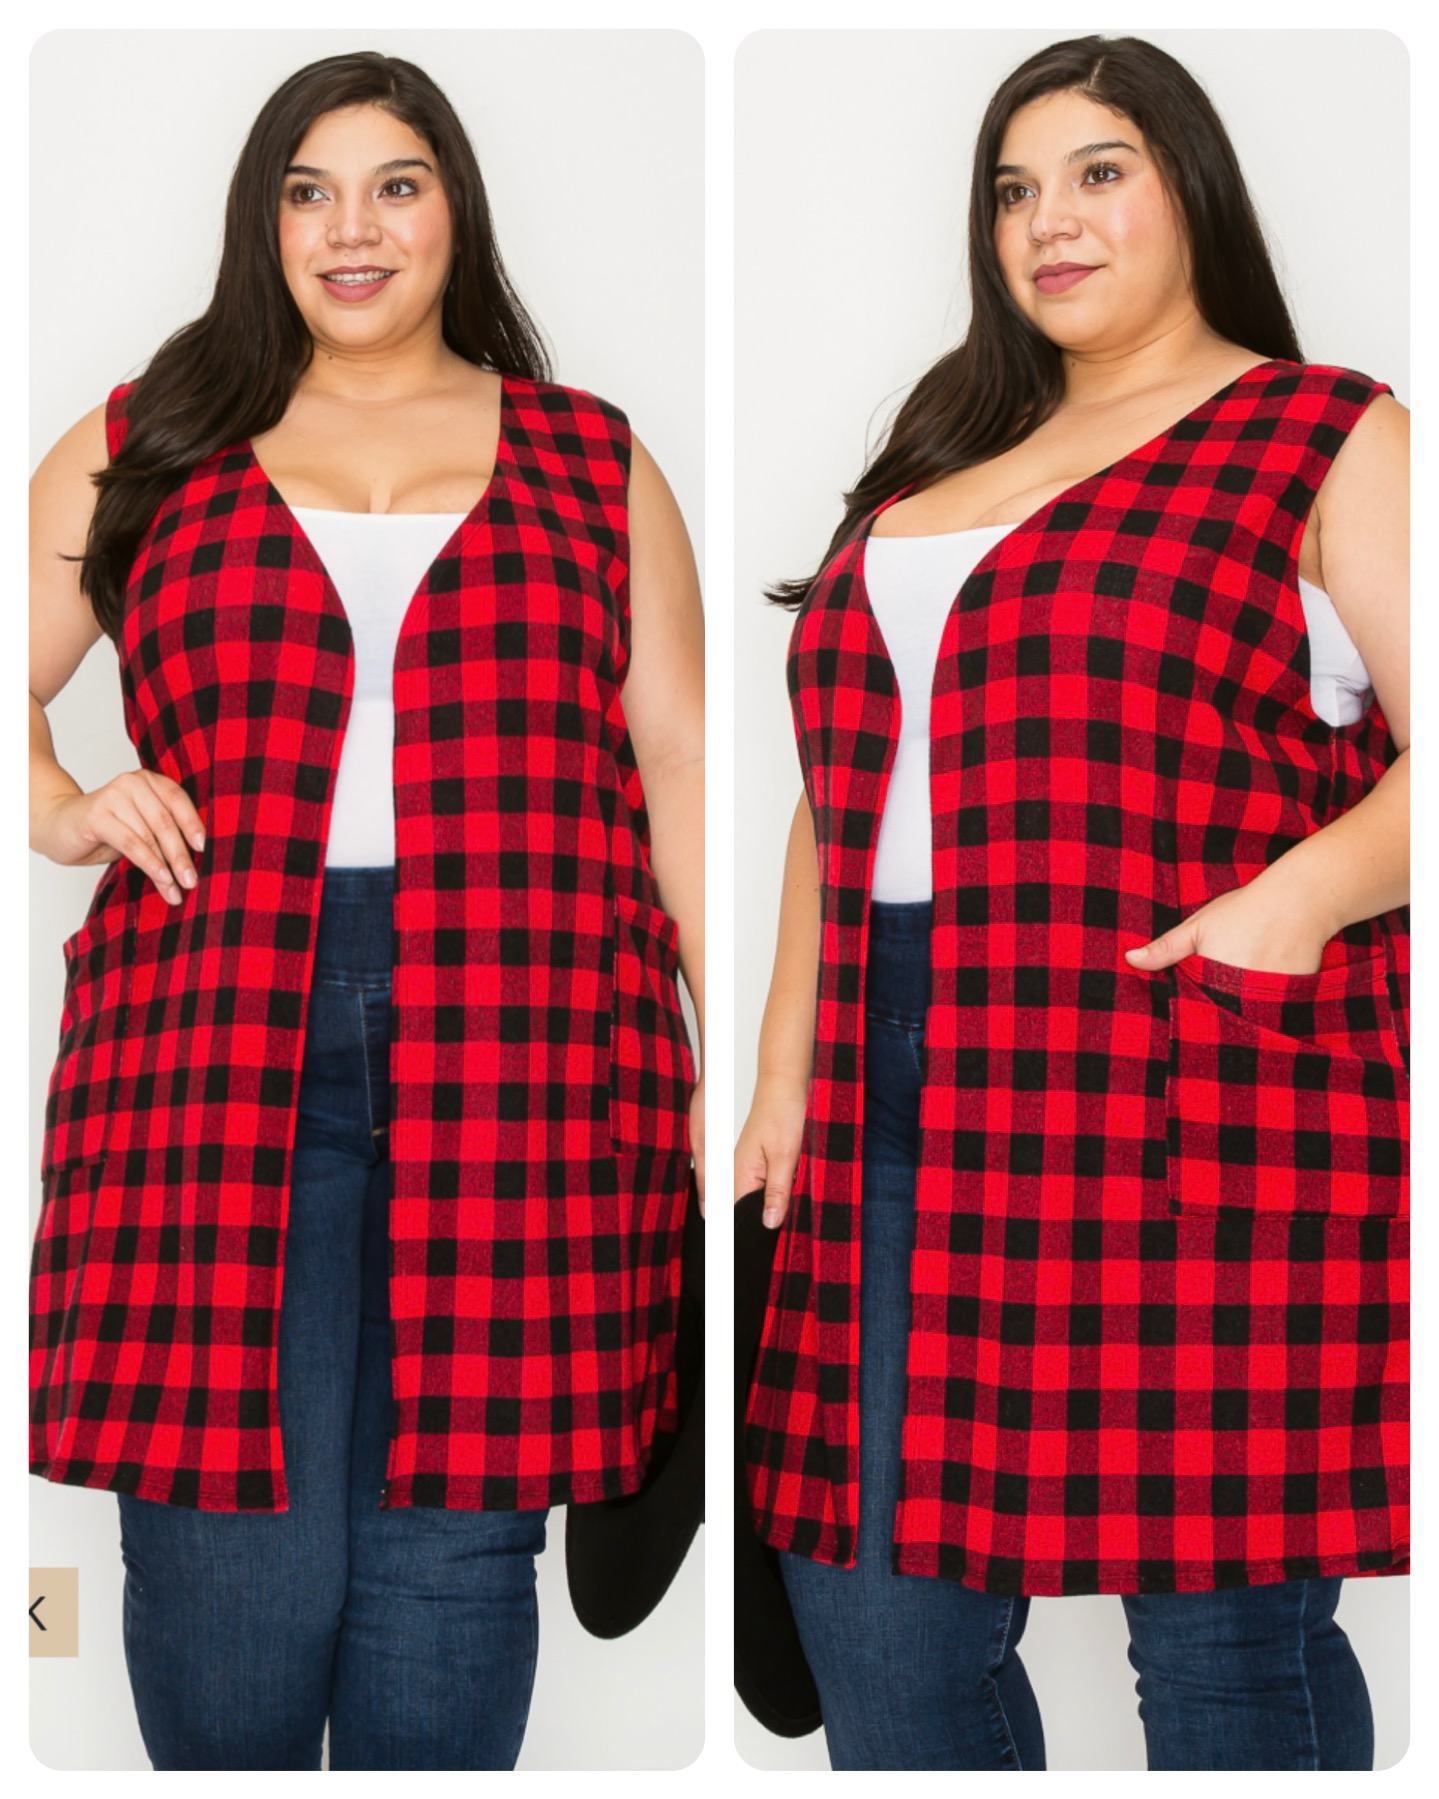 Size 4x
Sleeveless red/black buffalo plaid vest
Front pockets!
polyester/spandex